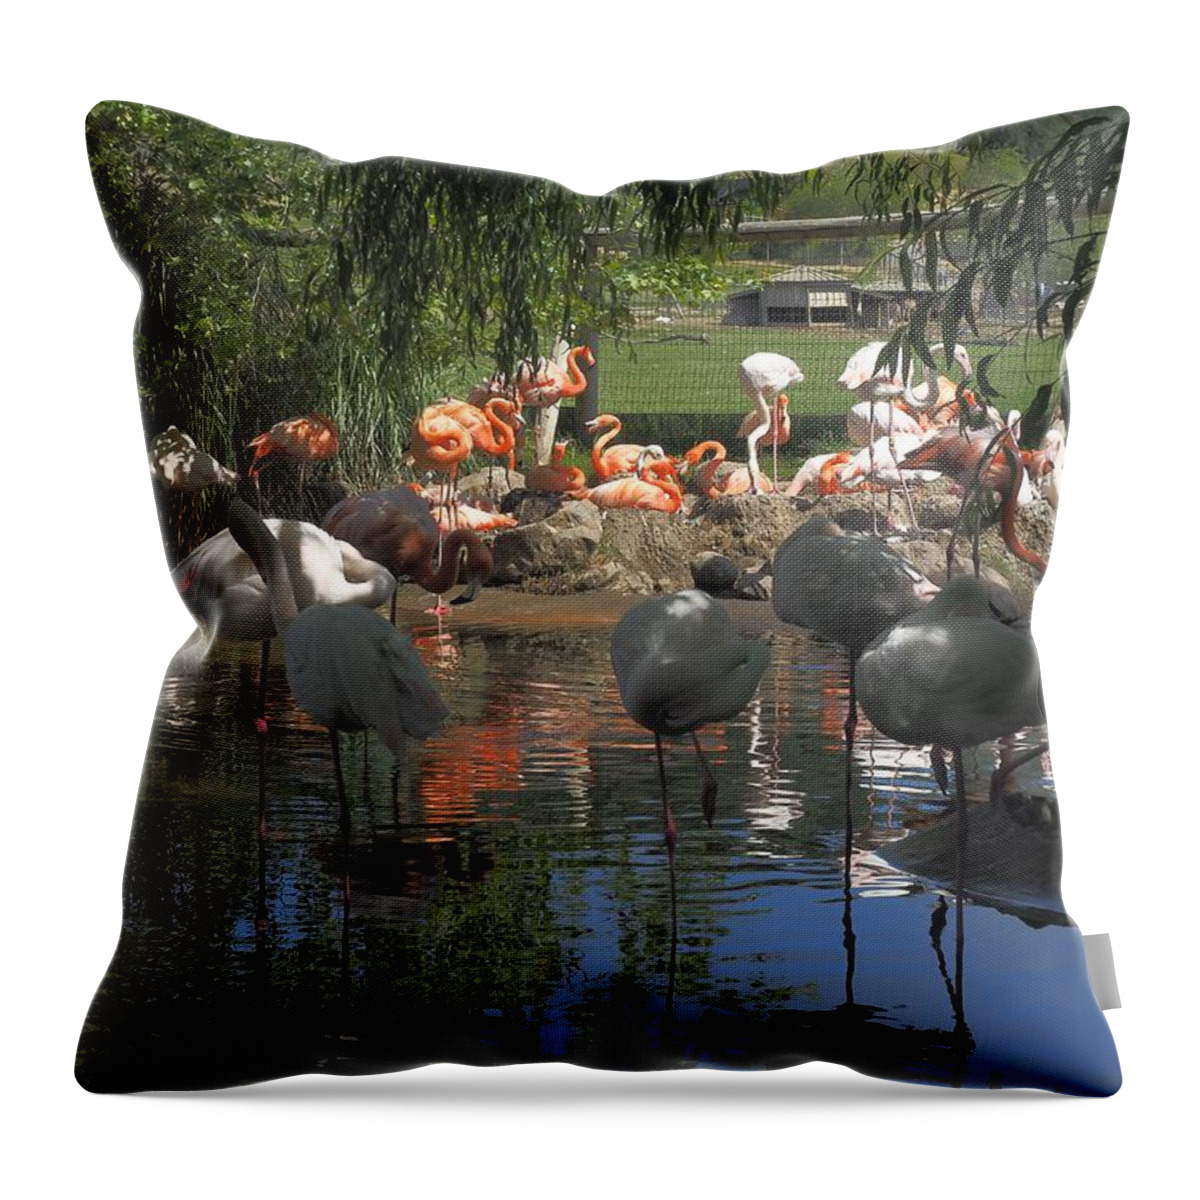 Wildlife Throw Pillow featuring the photograph Flamingos on the Pond by Richard Thomas